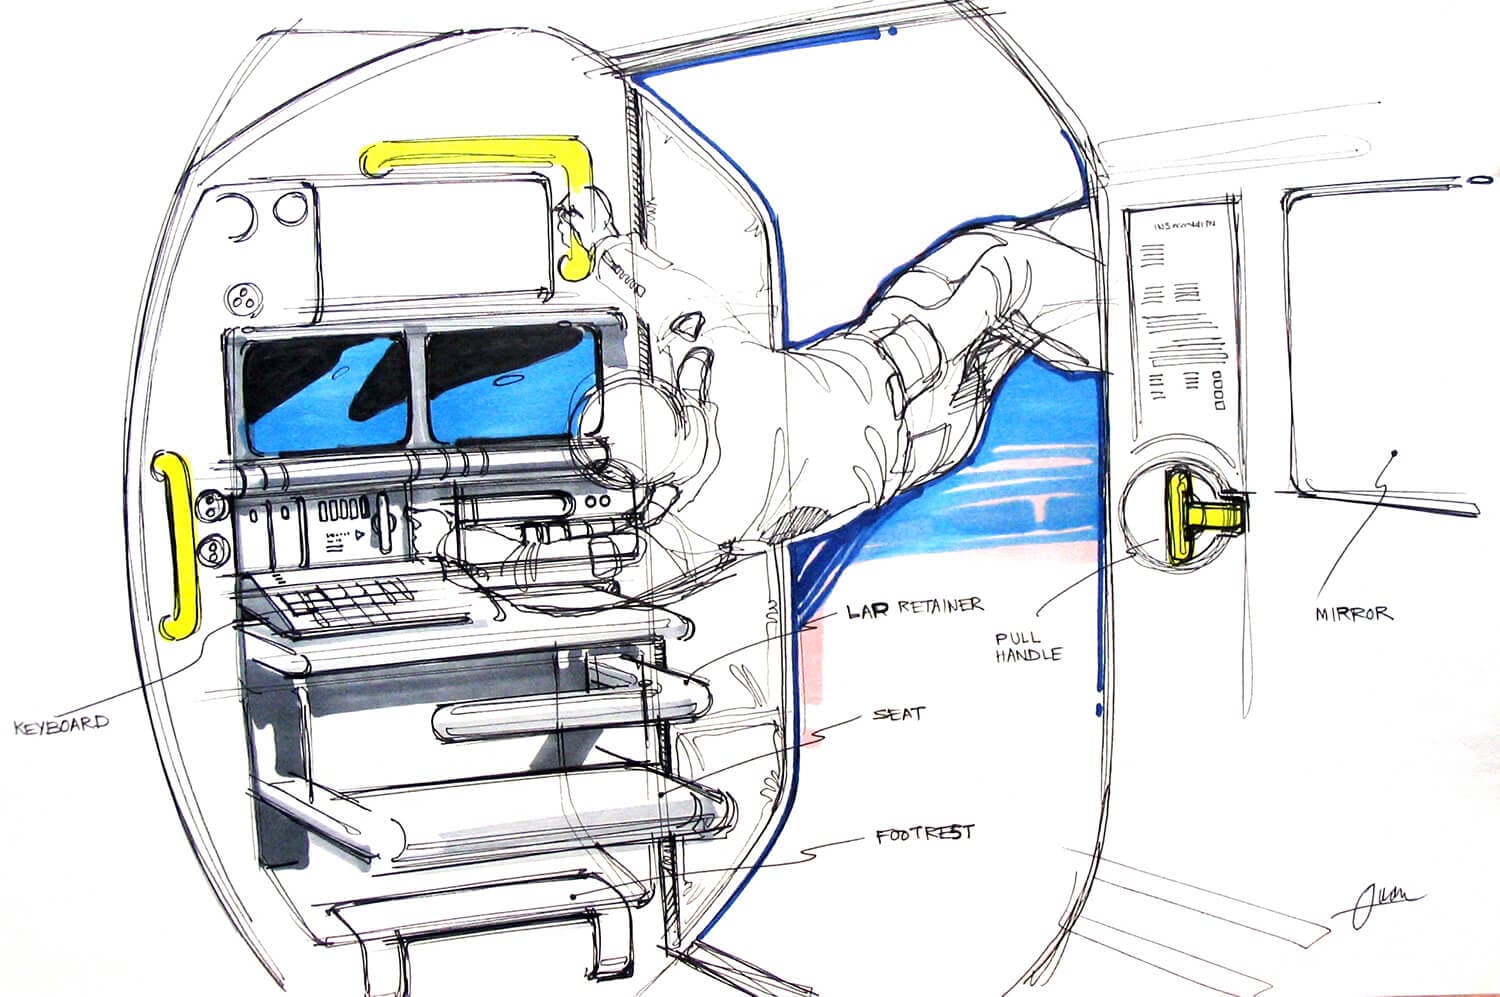 ISS workstation concept sketch by Bill Quan, Senior Industrial Designer, TEAGUE